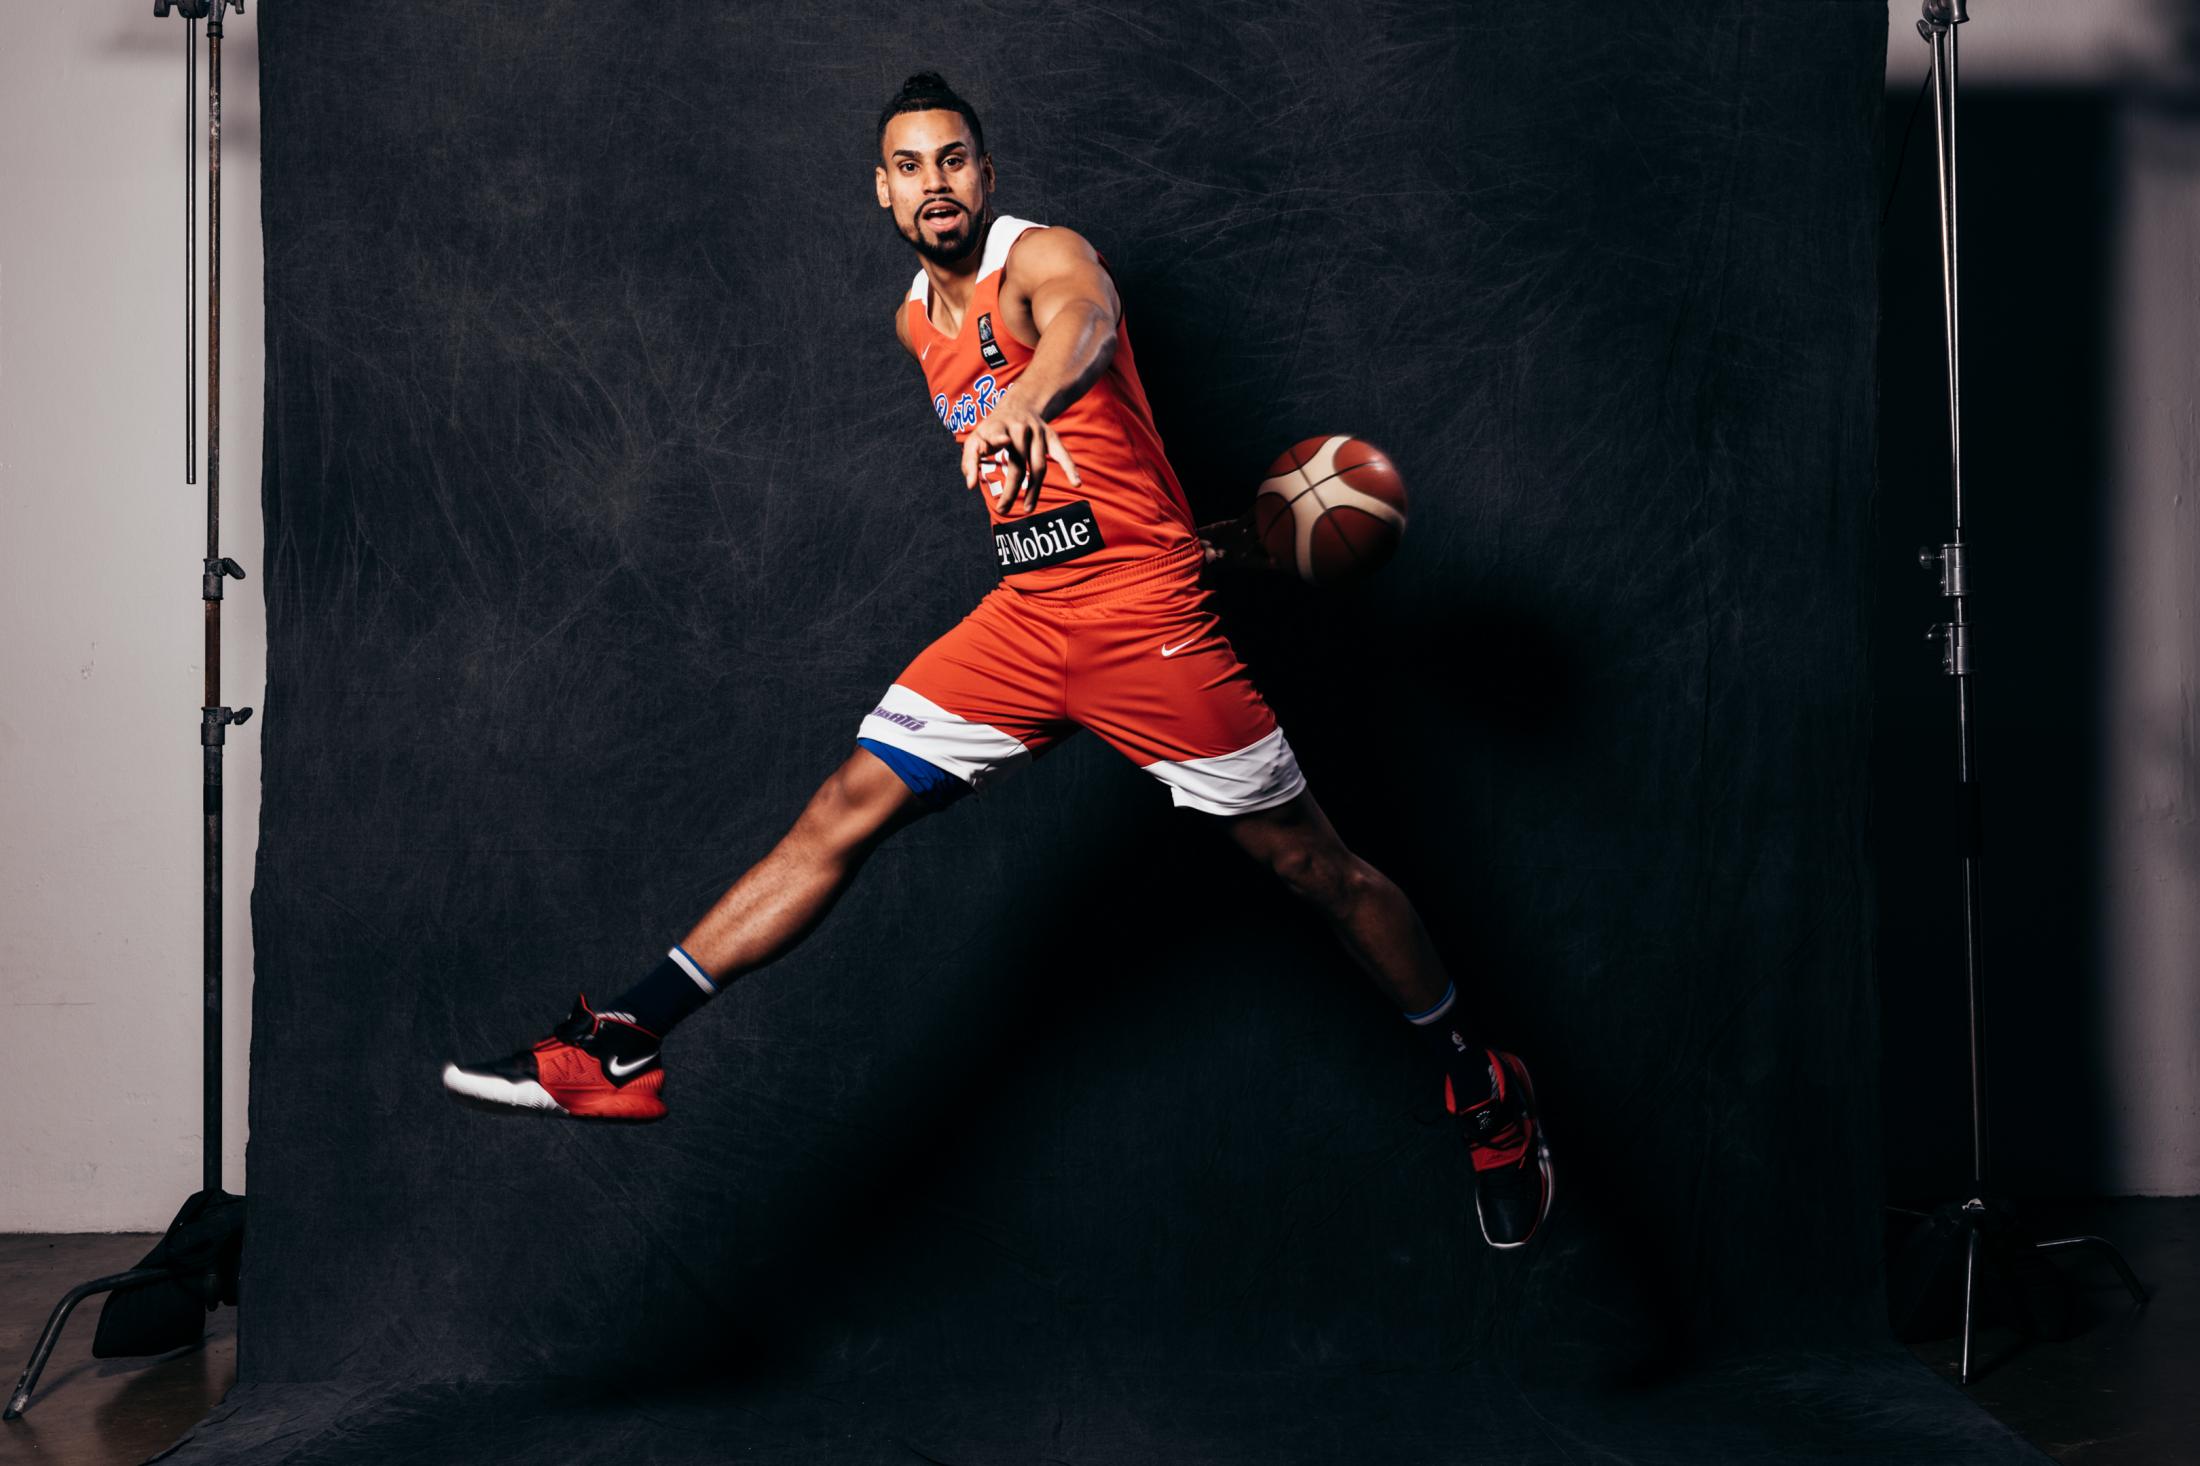 BSN & FIBA Portraits